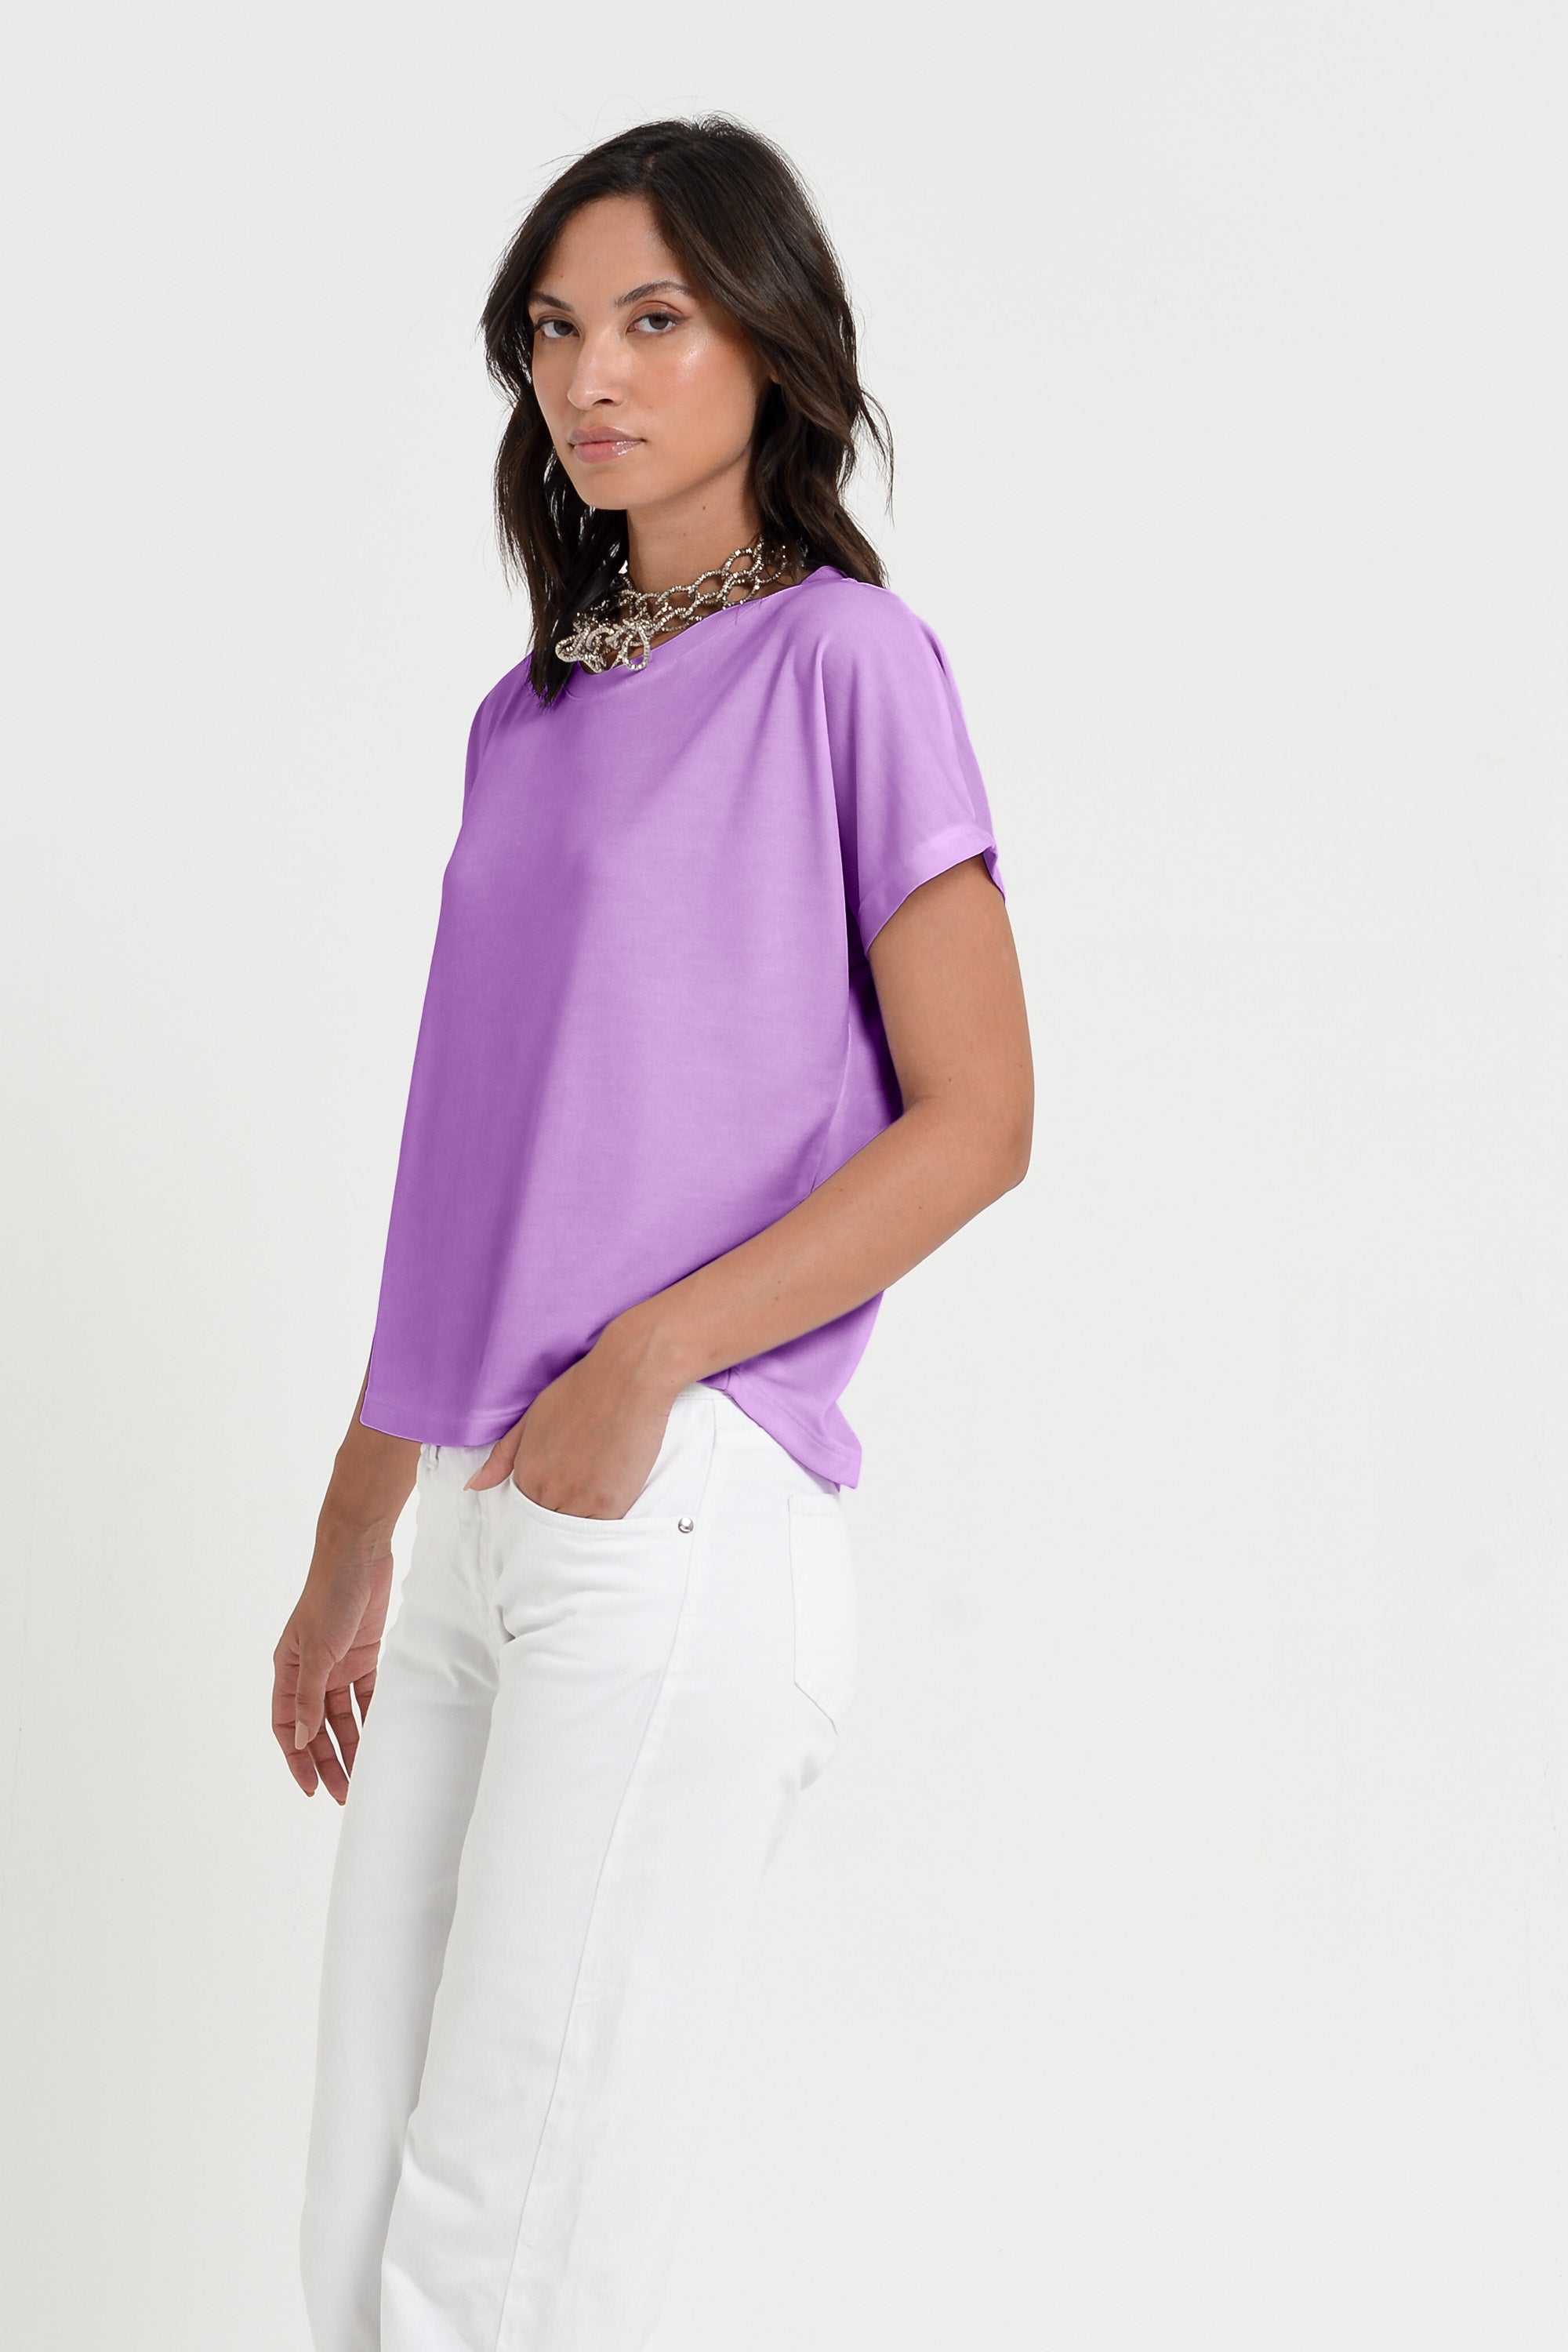 Vico T-Shirt - Women's Cotton T-Shirt - Morado